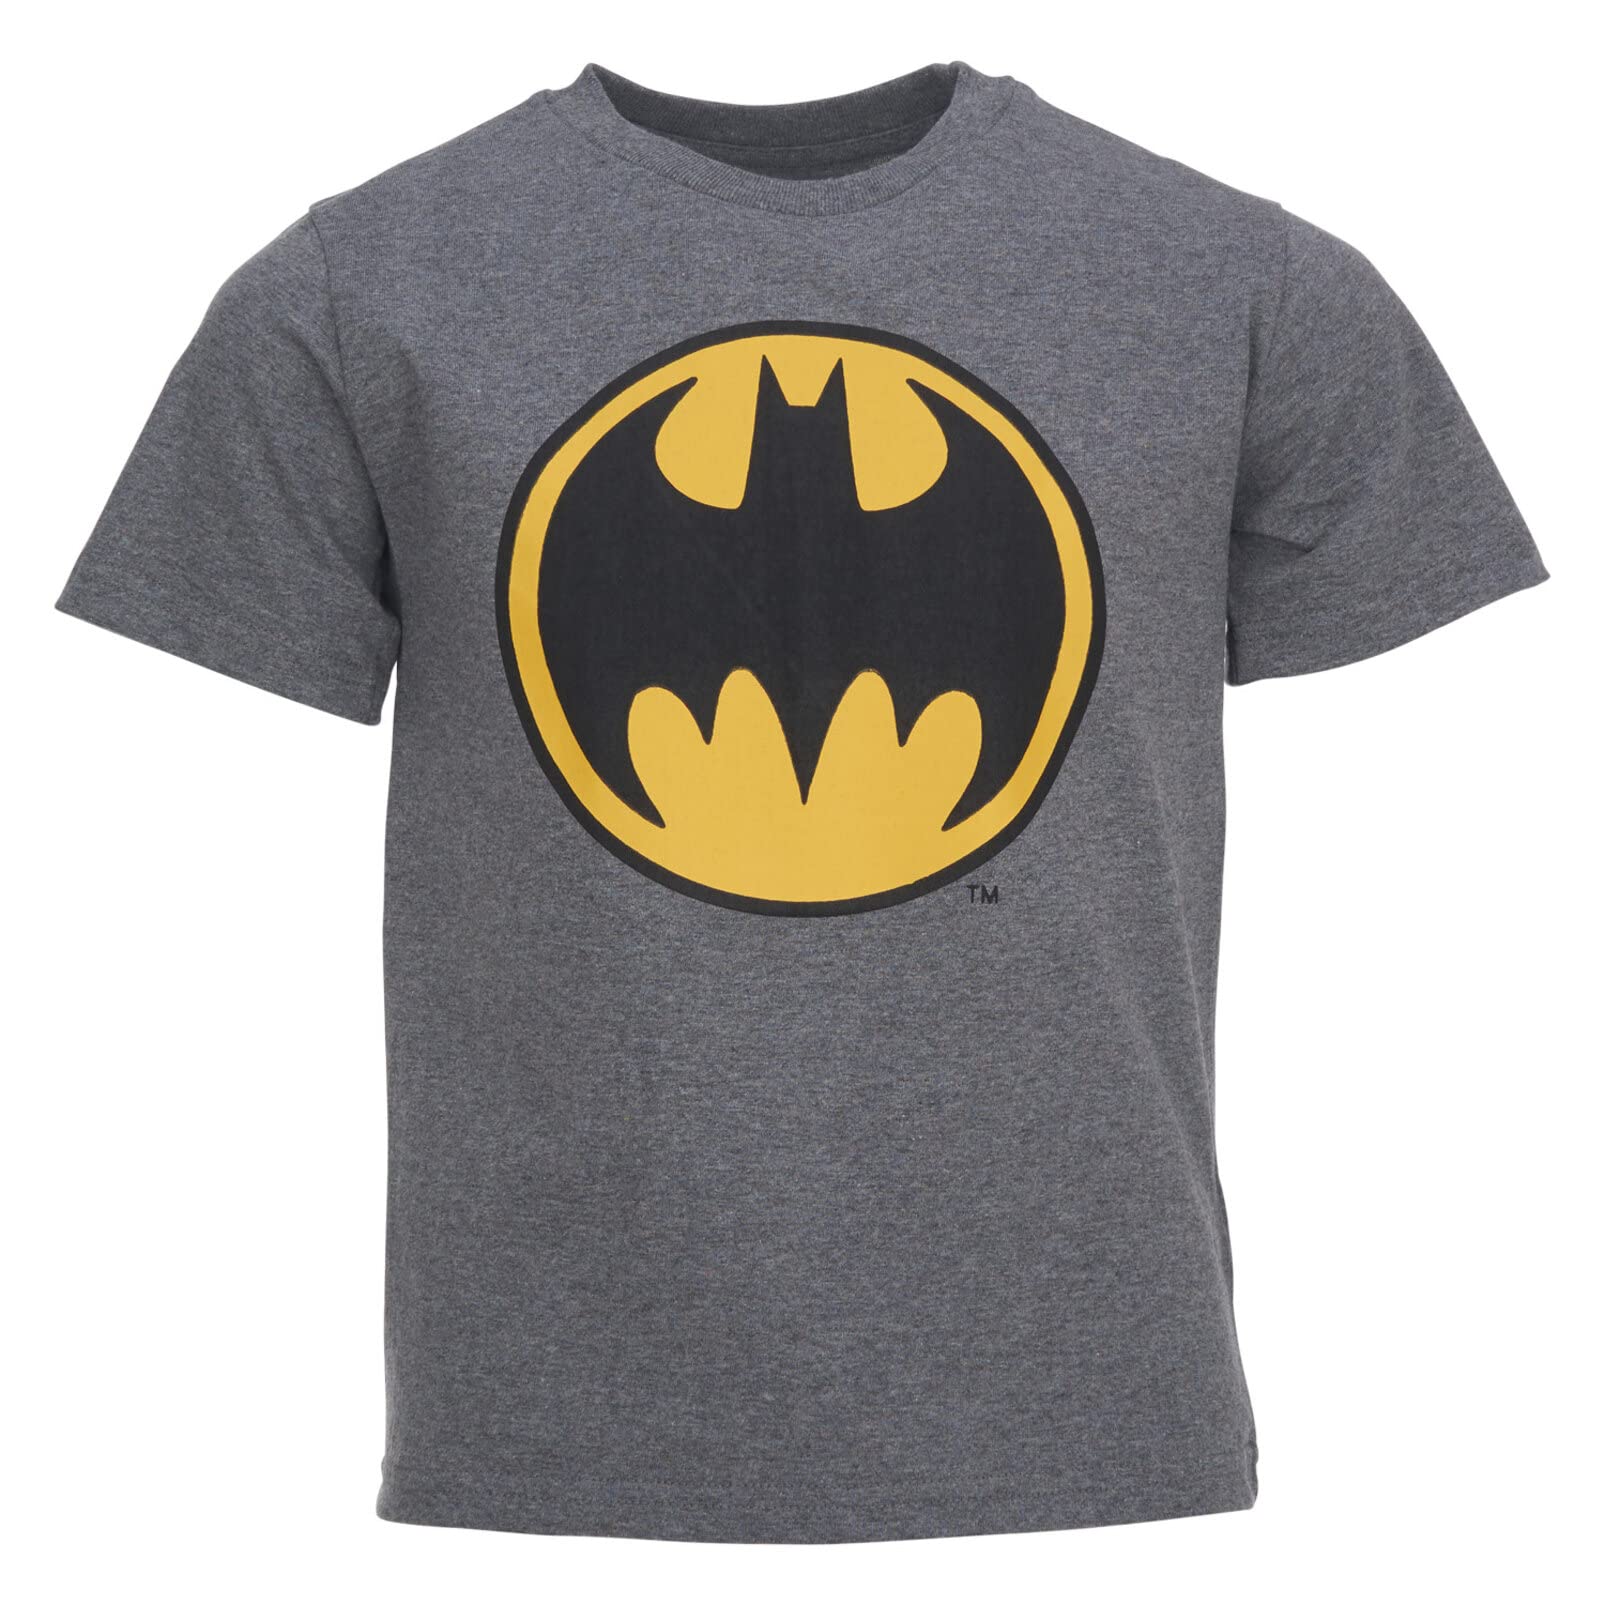 DC Comics Justice League The Flash Superman Batman 3 Pack T-Shirts Toddler to Big Kid